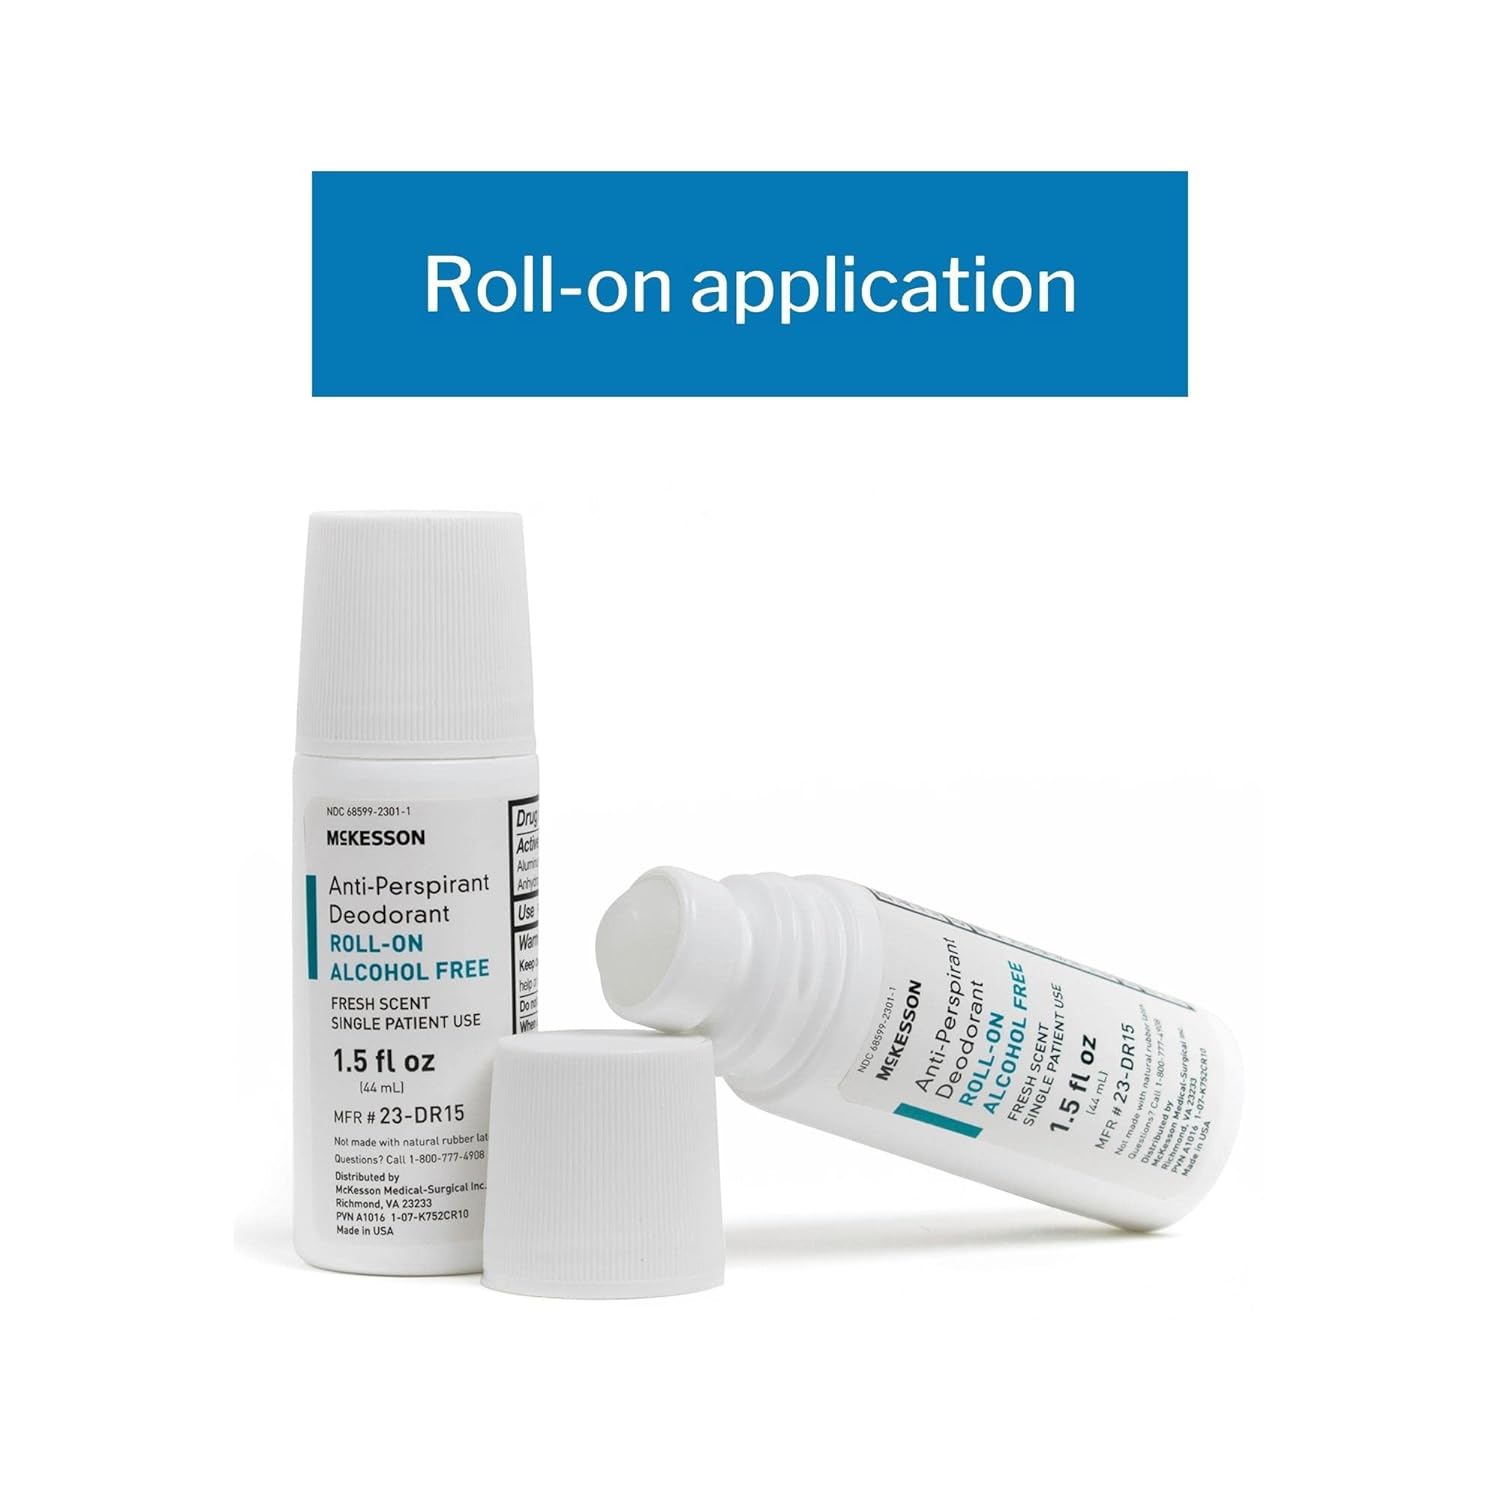 McKesson Antiperspirant Deodorant Roll-On, Alcohol-Free, Fresh Scent, Single Patient Use, 1.5 fl oz, 1 Count